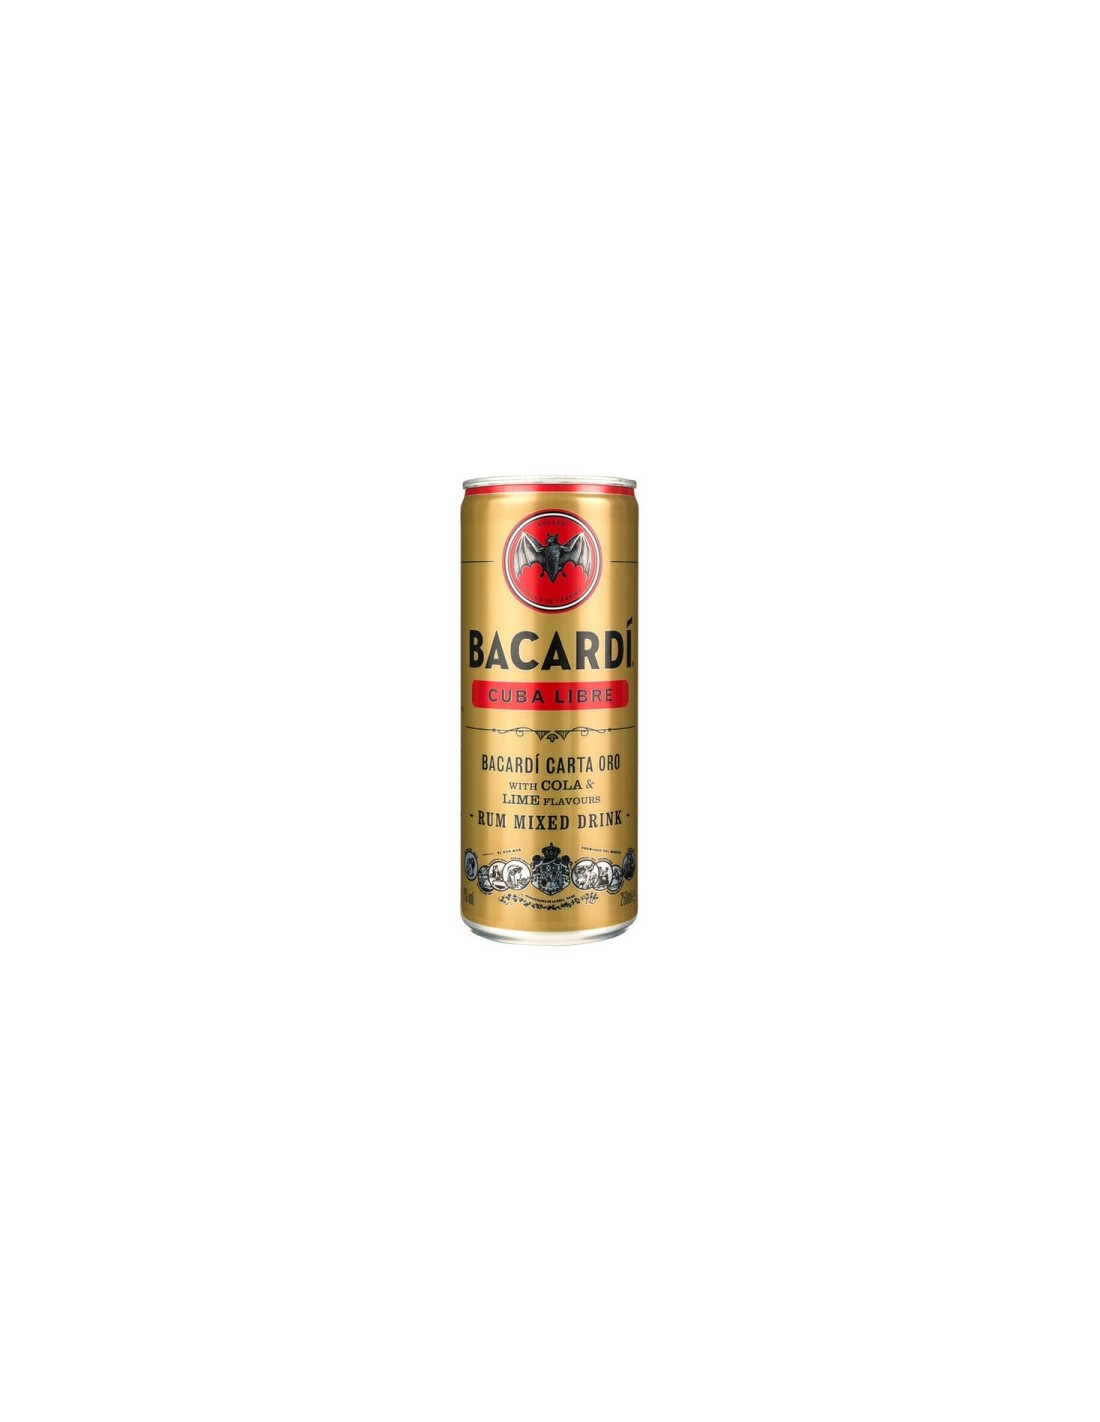 Cocktail Bacardi Cuba Libre & Cola, 7% alc., 0.25L, Puerto Rico alcooldiscount.ro